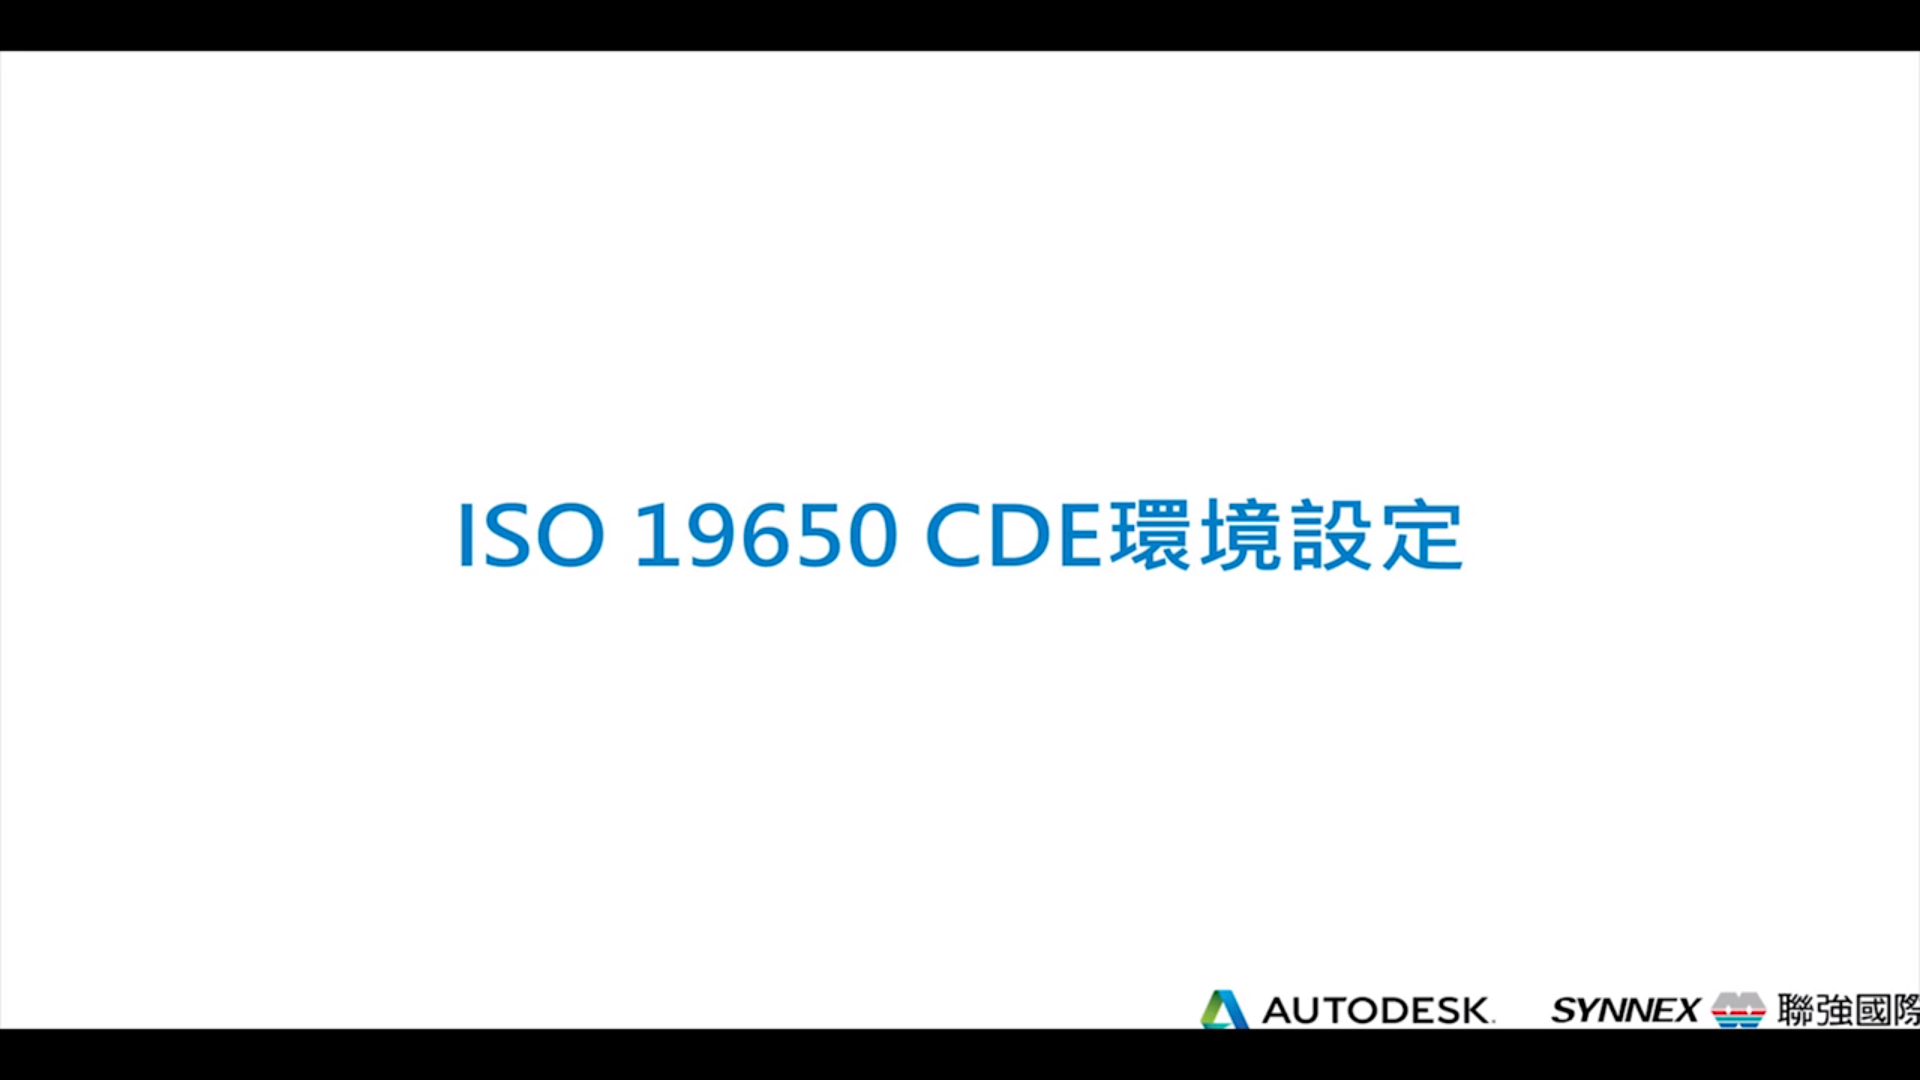 【Autodesk Construction Cloud】文件管理 (六) ISO19650 CDE 環境設定